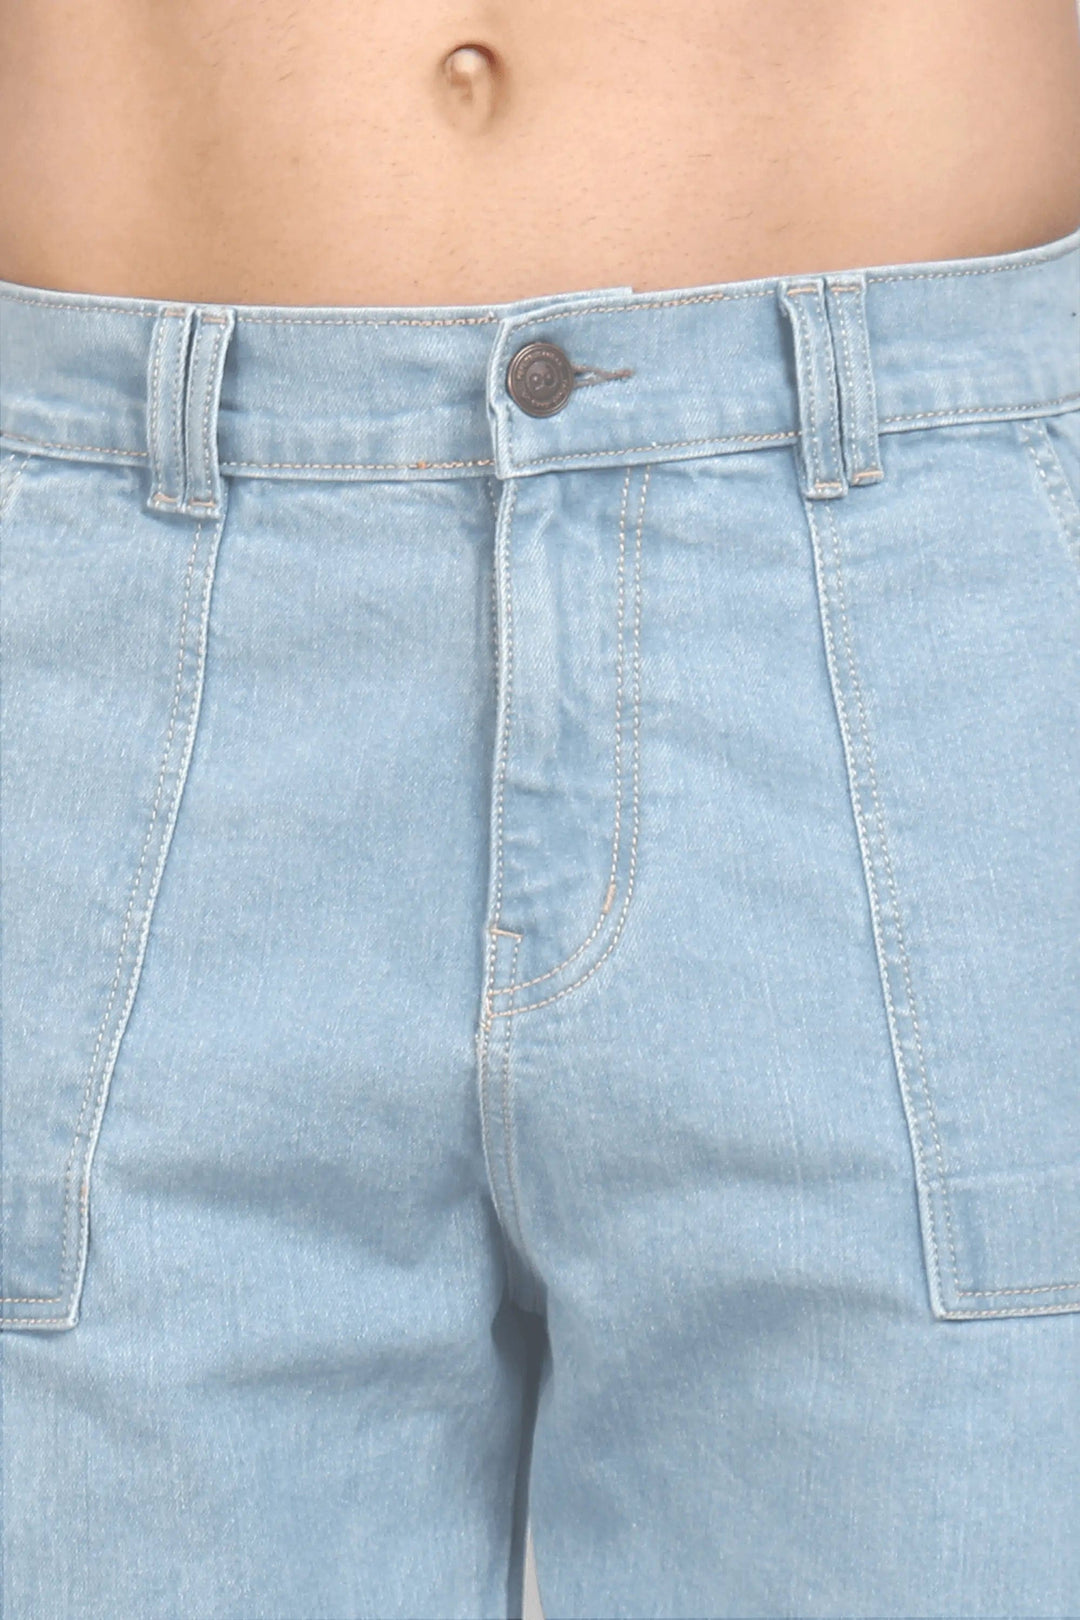 Men's Loose Fit Multiple Pocket Light Blue Cargo Denim Jeans - Peplos Jeans 